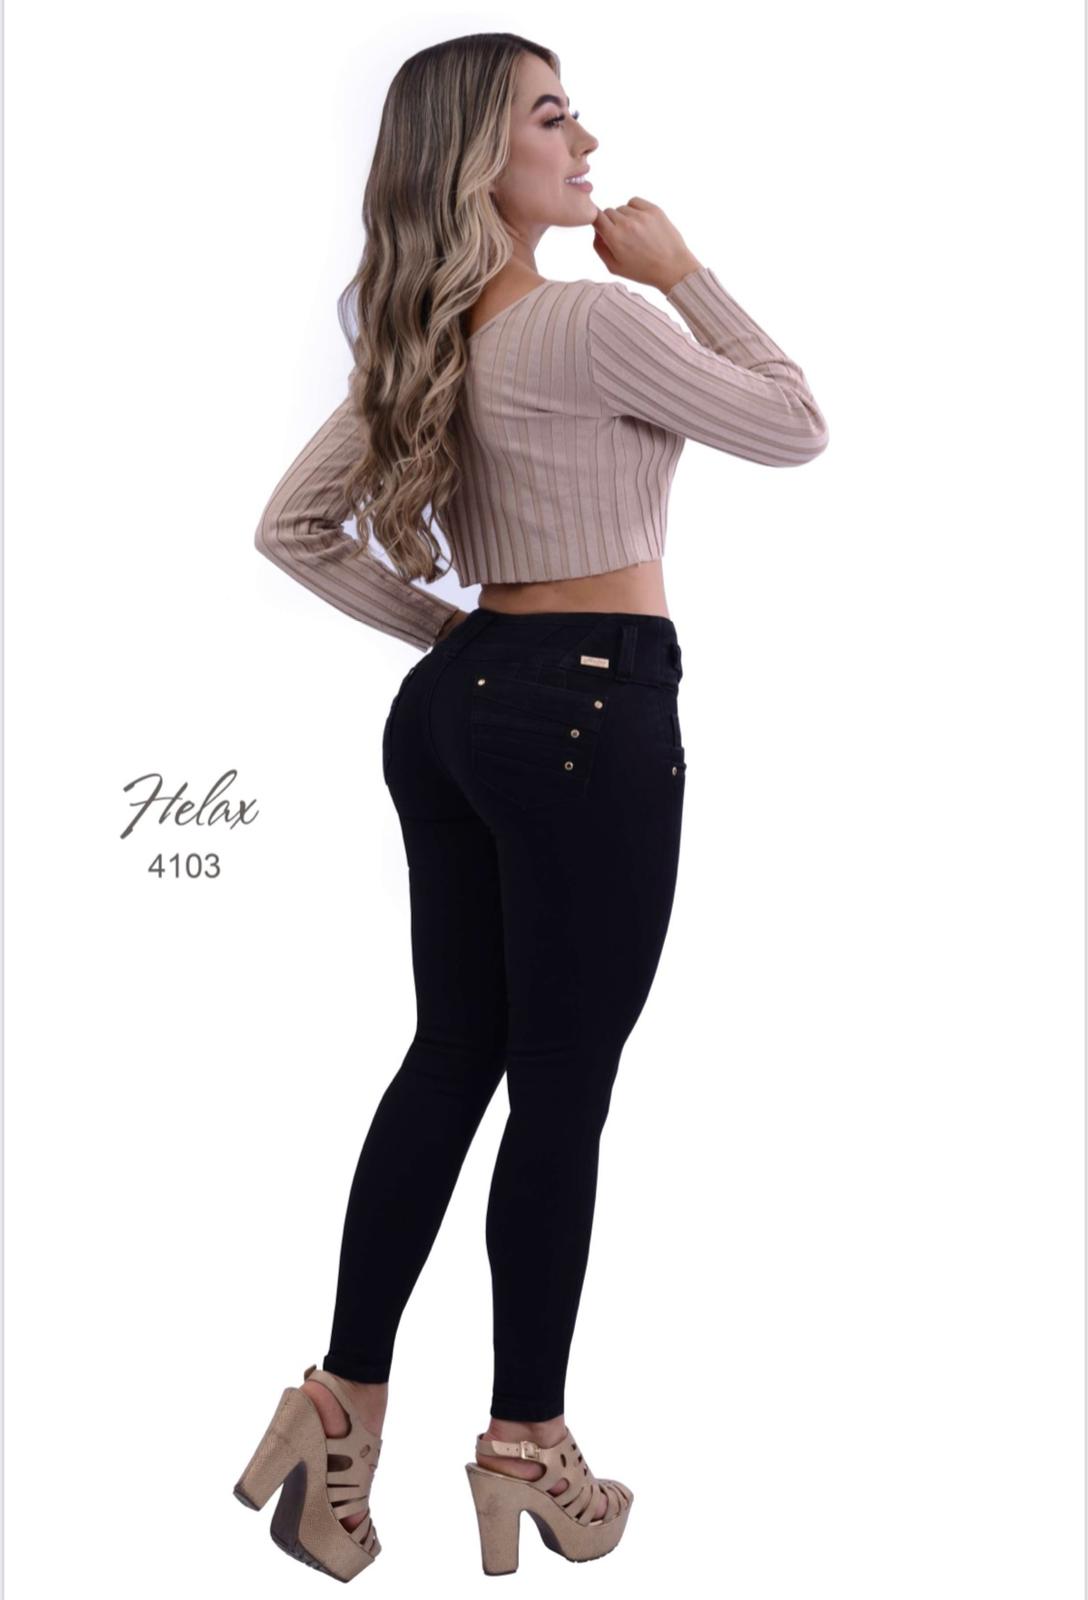 Alana's Colombian Jeans Levantacola